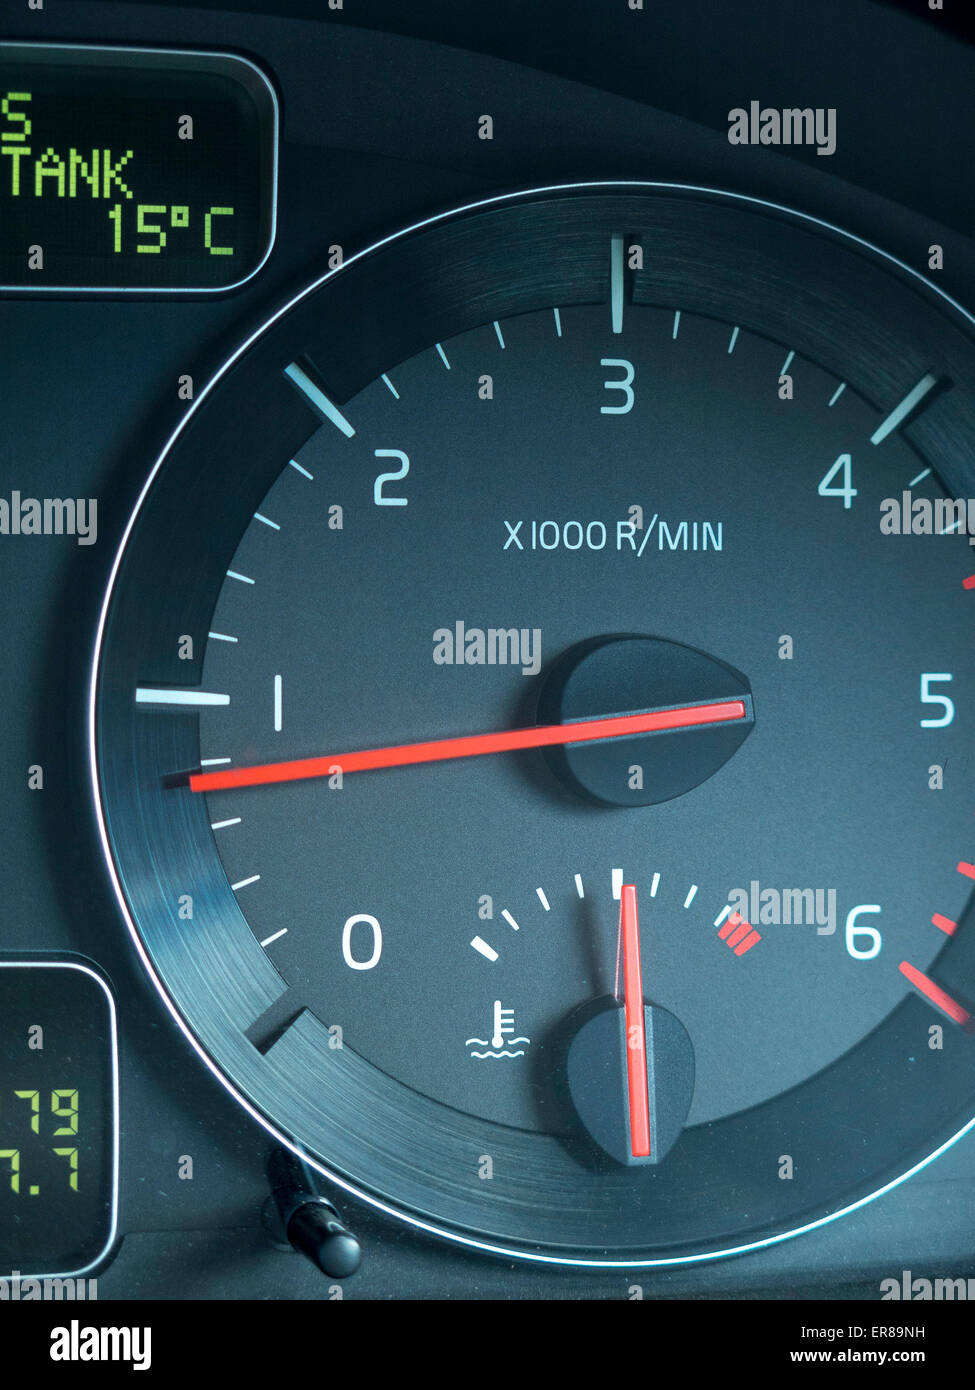 Matlock,derbyshire,UK. May 26, 2015. close up of a car dashboard showing dials Stock Photo